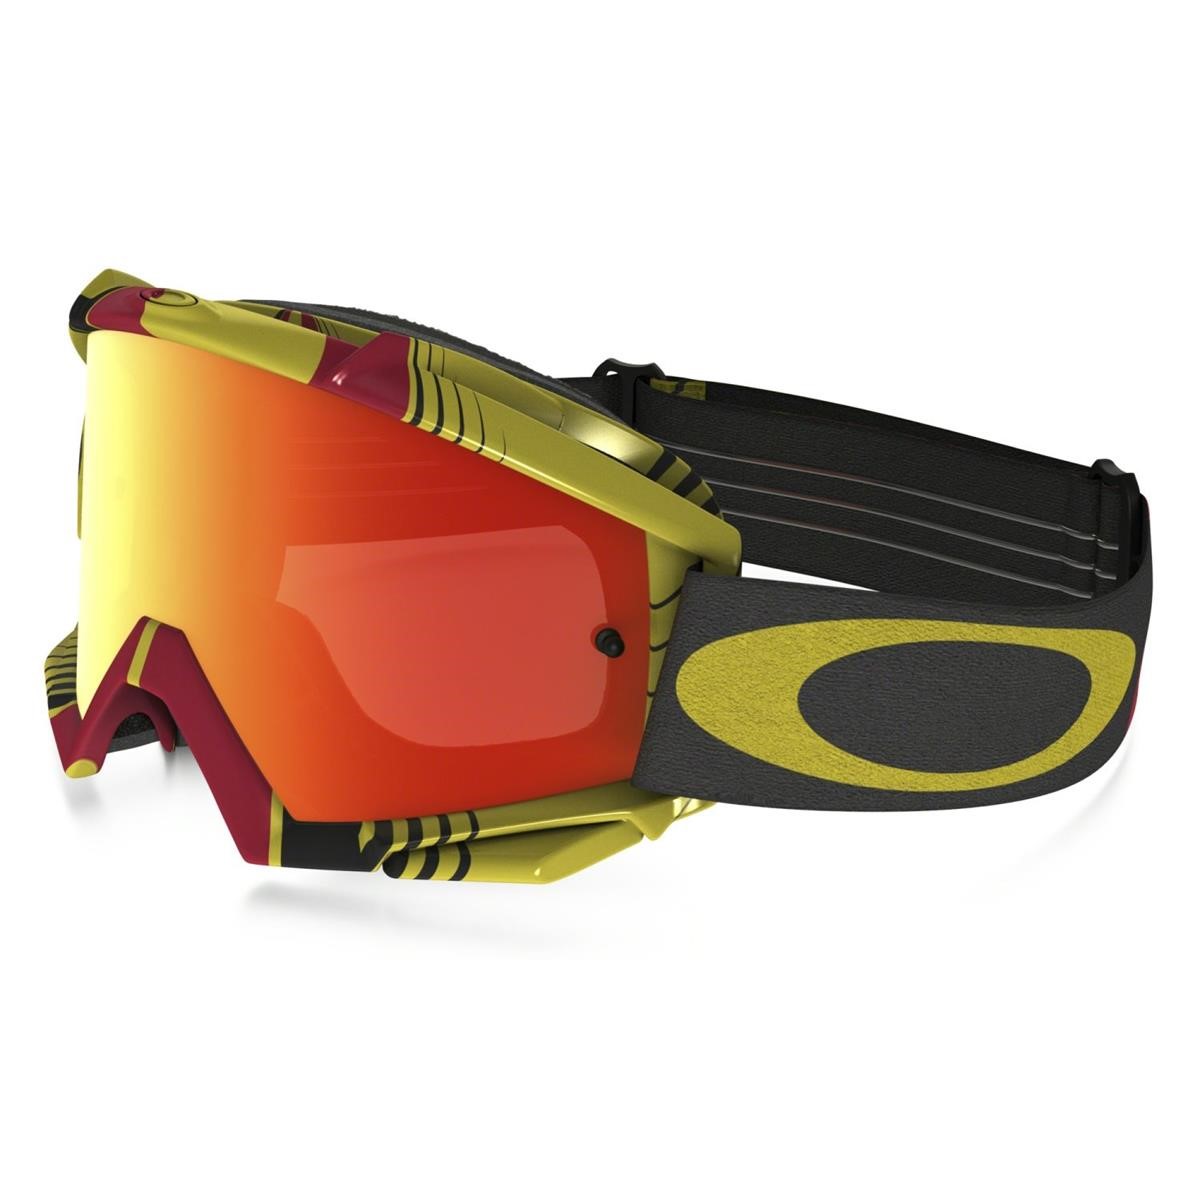 Oakley Goggle Proven MX Bio Hazard Red/Yellow - Fire Iridium Anti-Fog